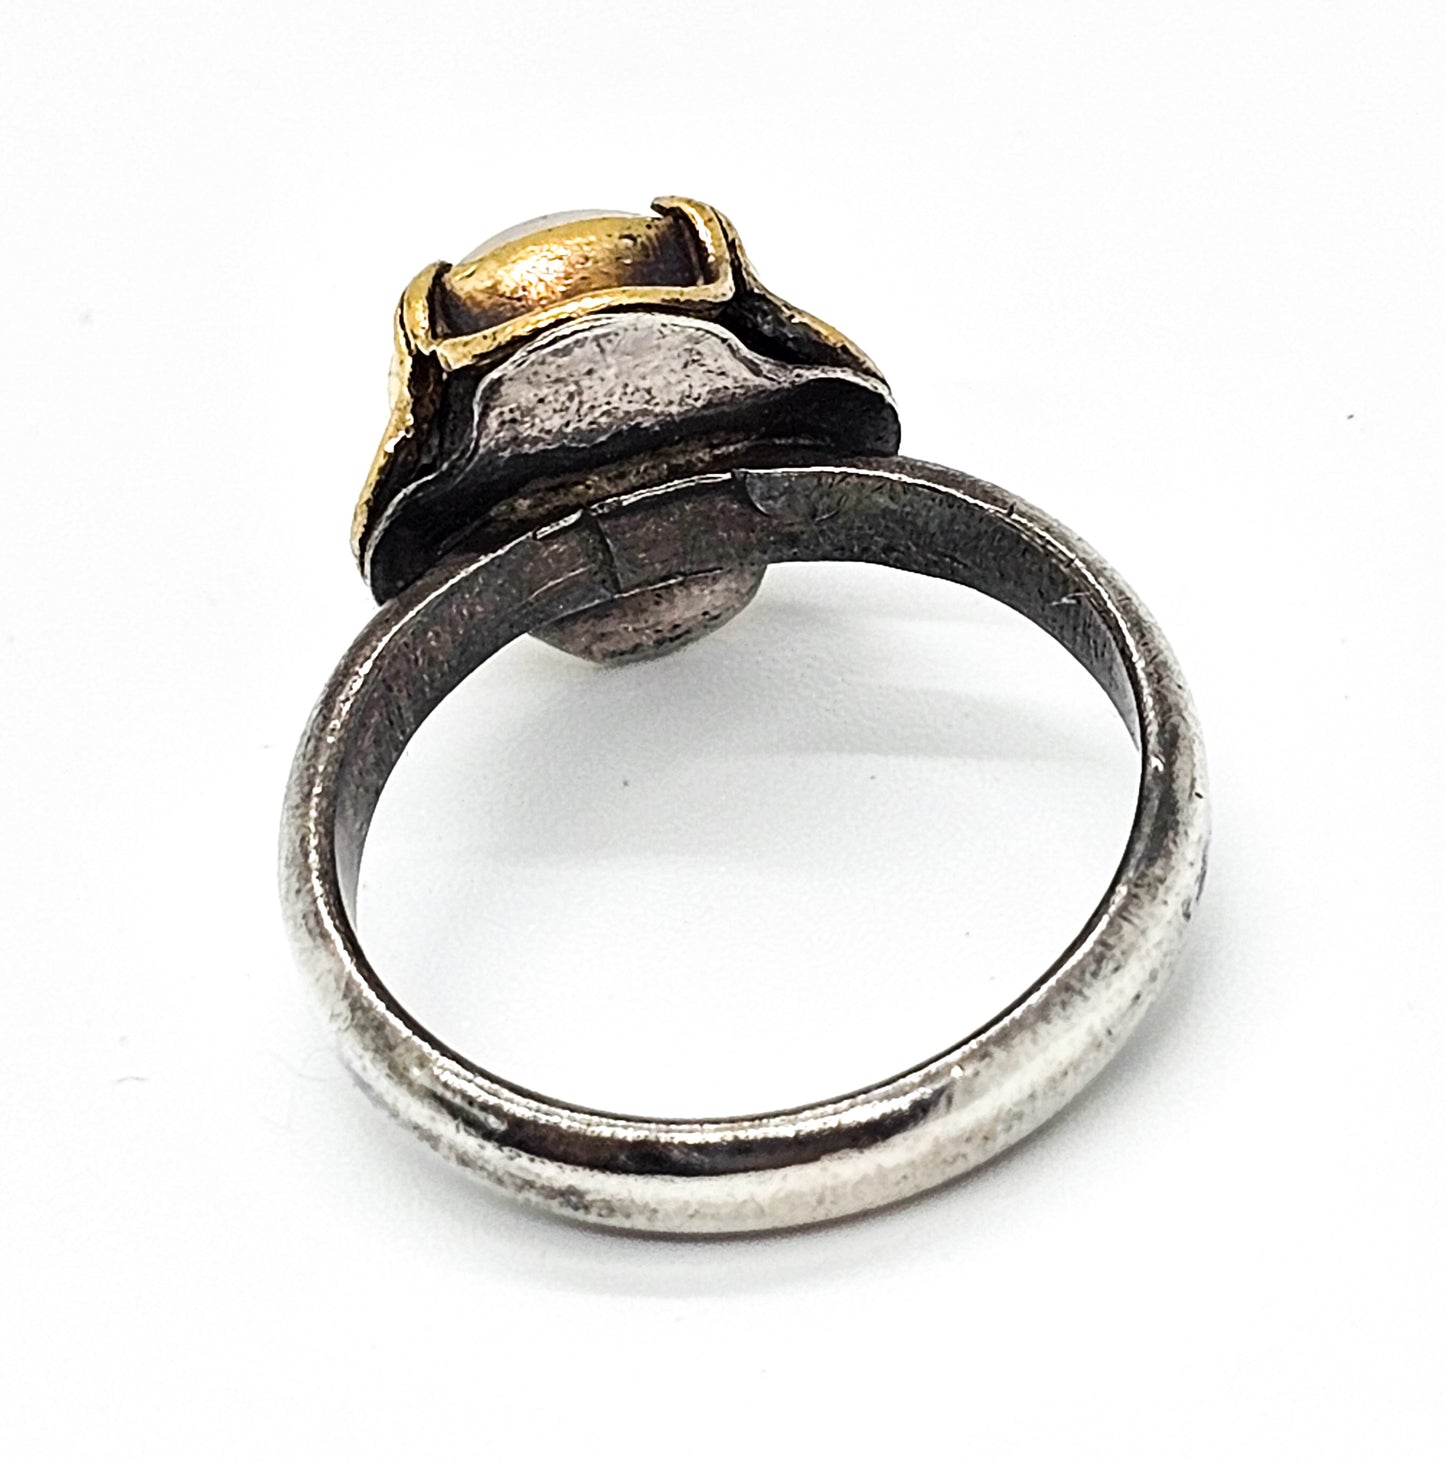 Star Quartz Chatoyant gemstone gold over sterling silver vintage ring size 6.5